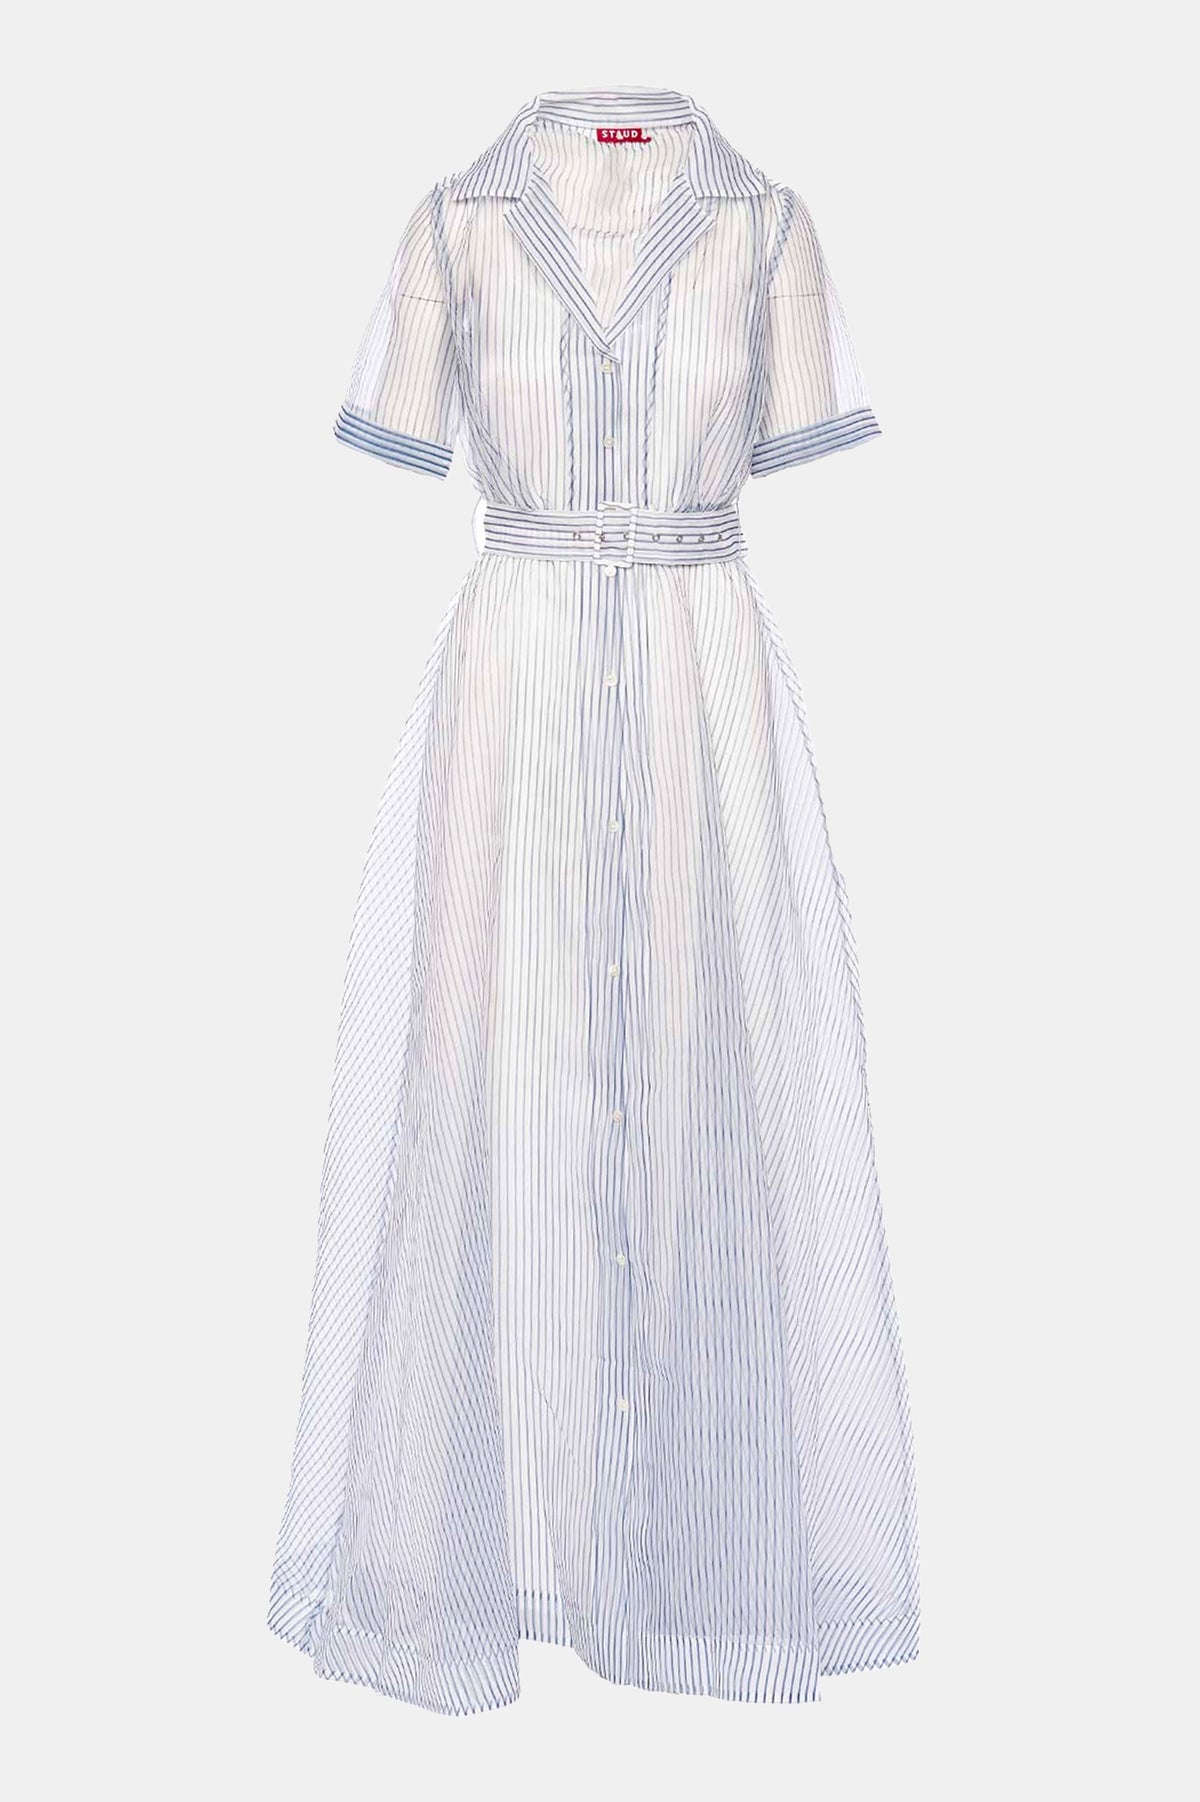 Millie Dress in Ivory Micro Stripe